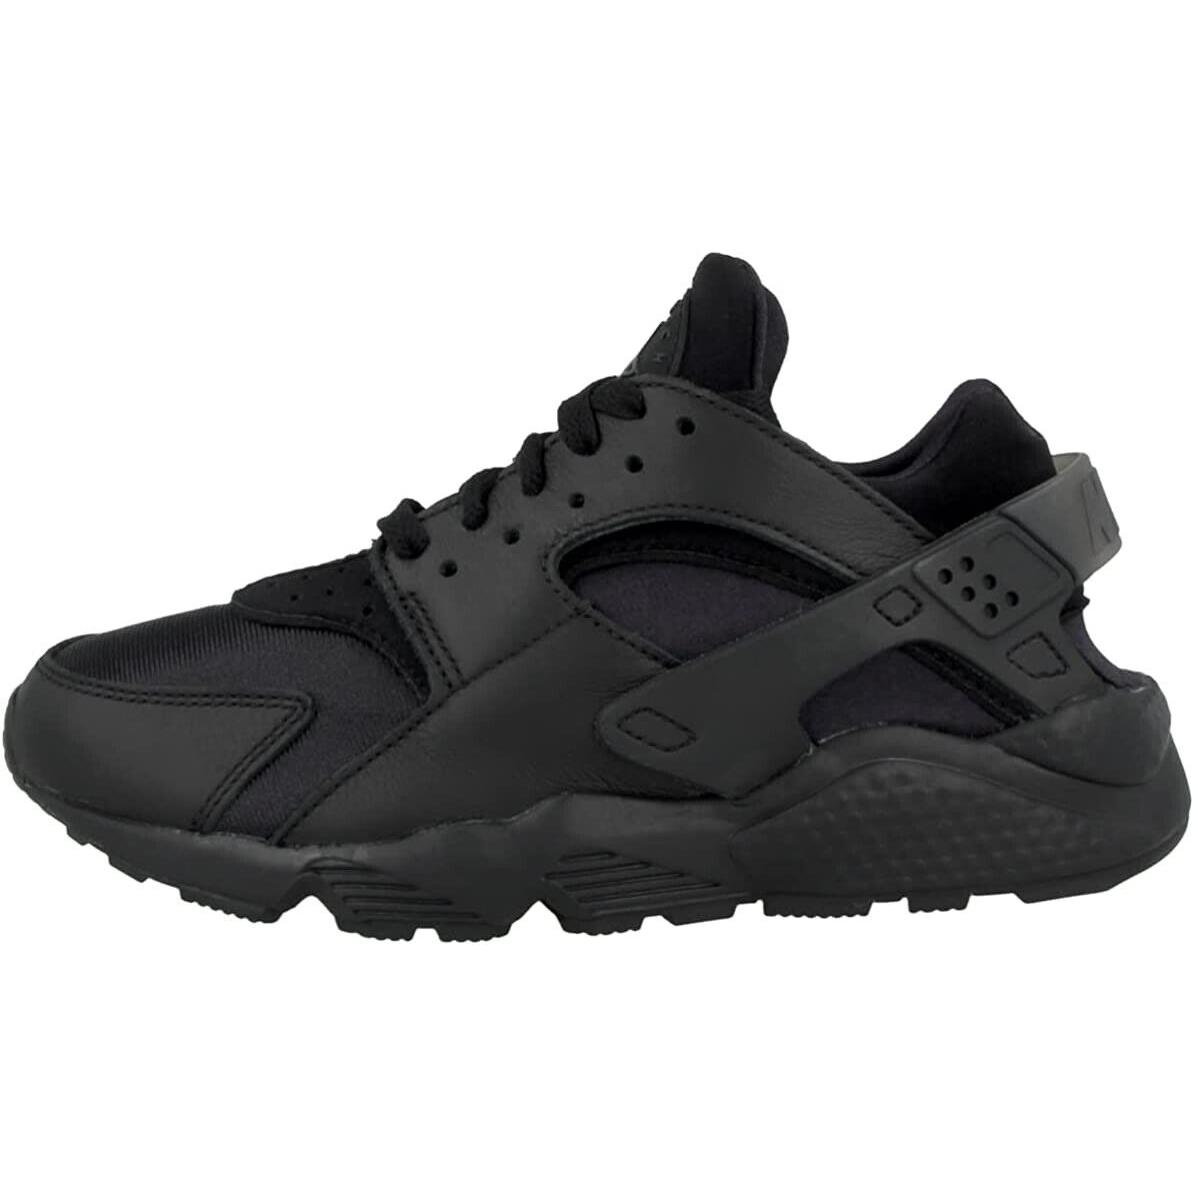 Nike Womens Air Huarache Running Shoes Box NO Lid DH4439 001 - BLACK/BLACK -ANTHRACITE